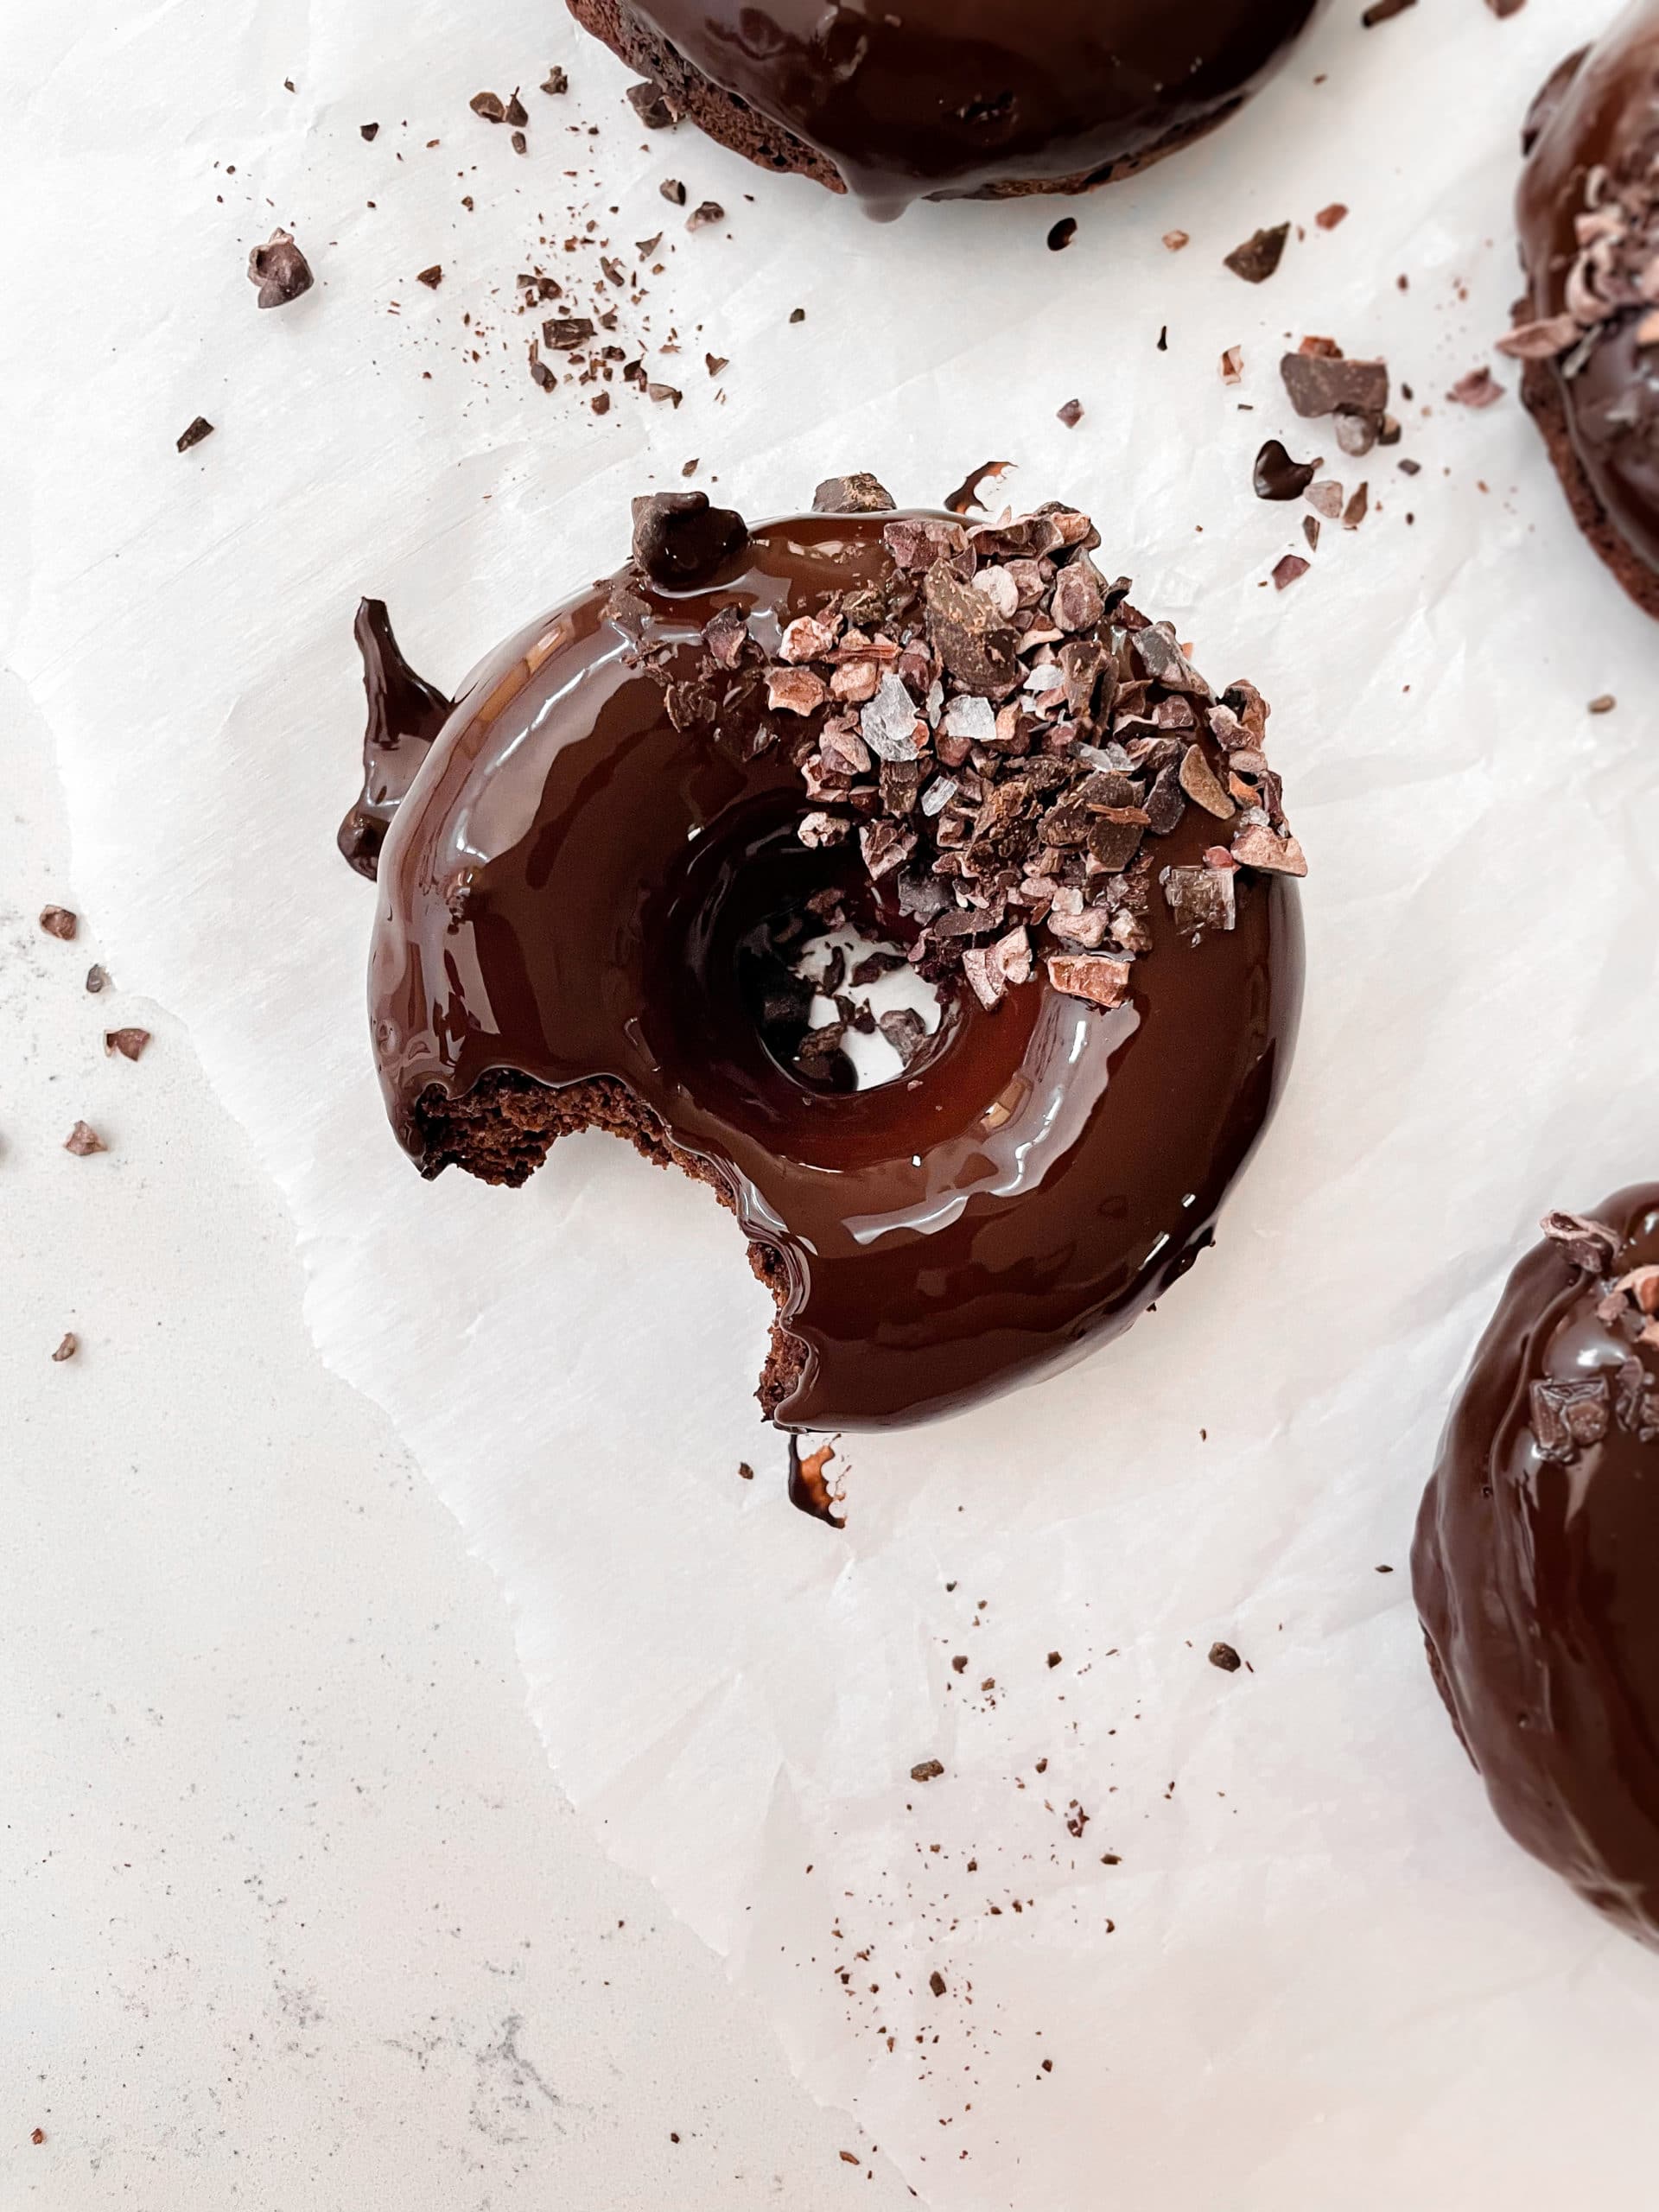 vegan chocolate baked donuts with chocolate glaze and flaky salt